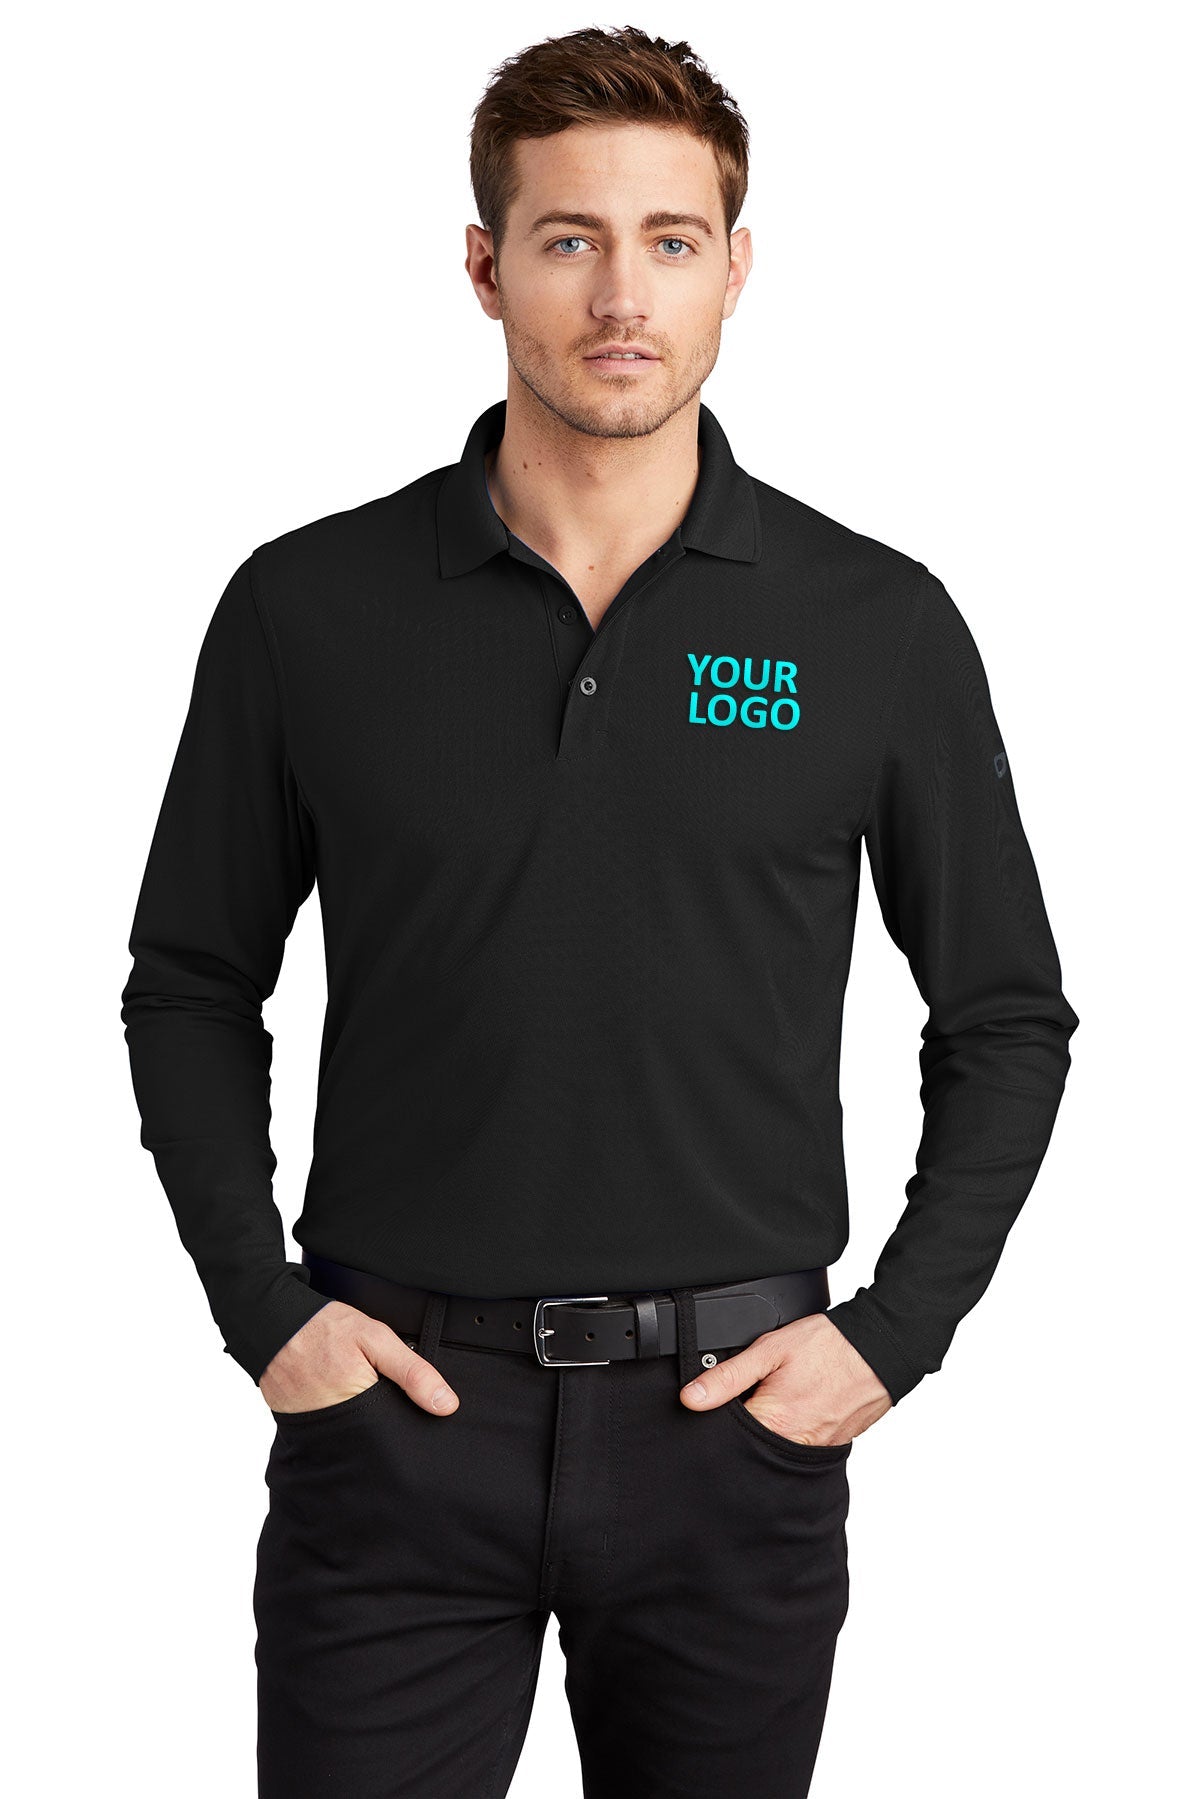 OGIO Blacktop OG105 business polos with logo